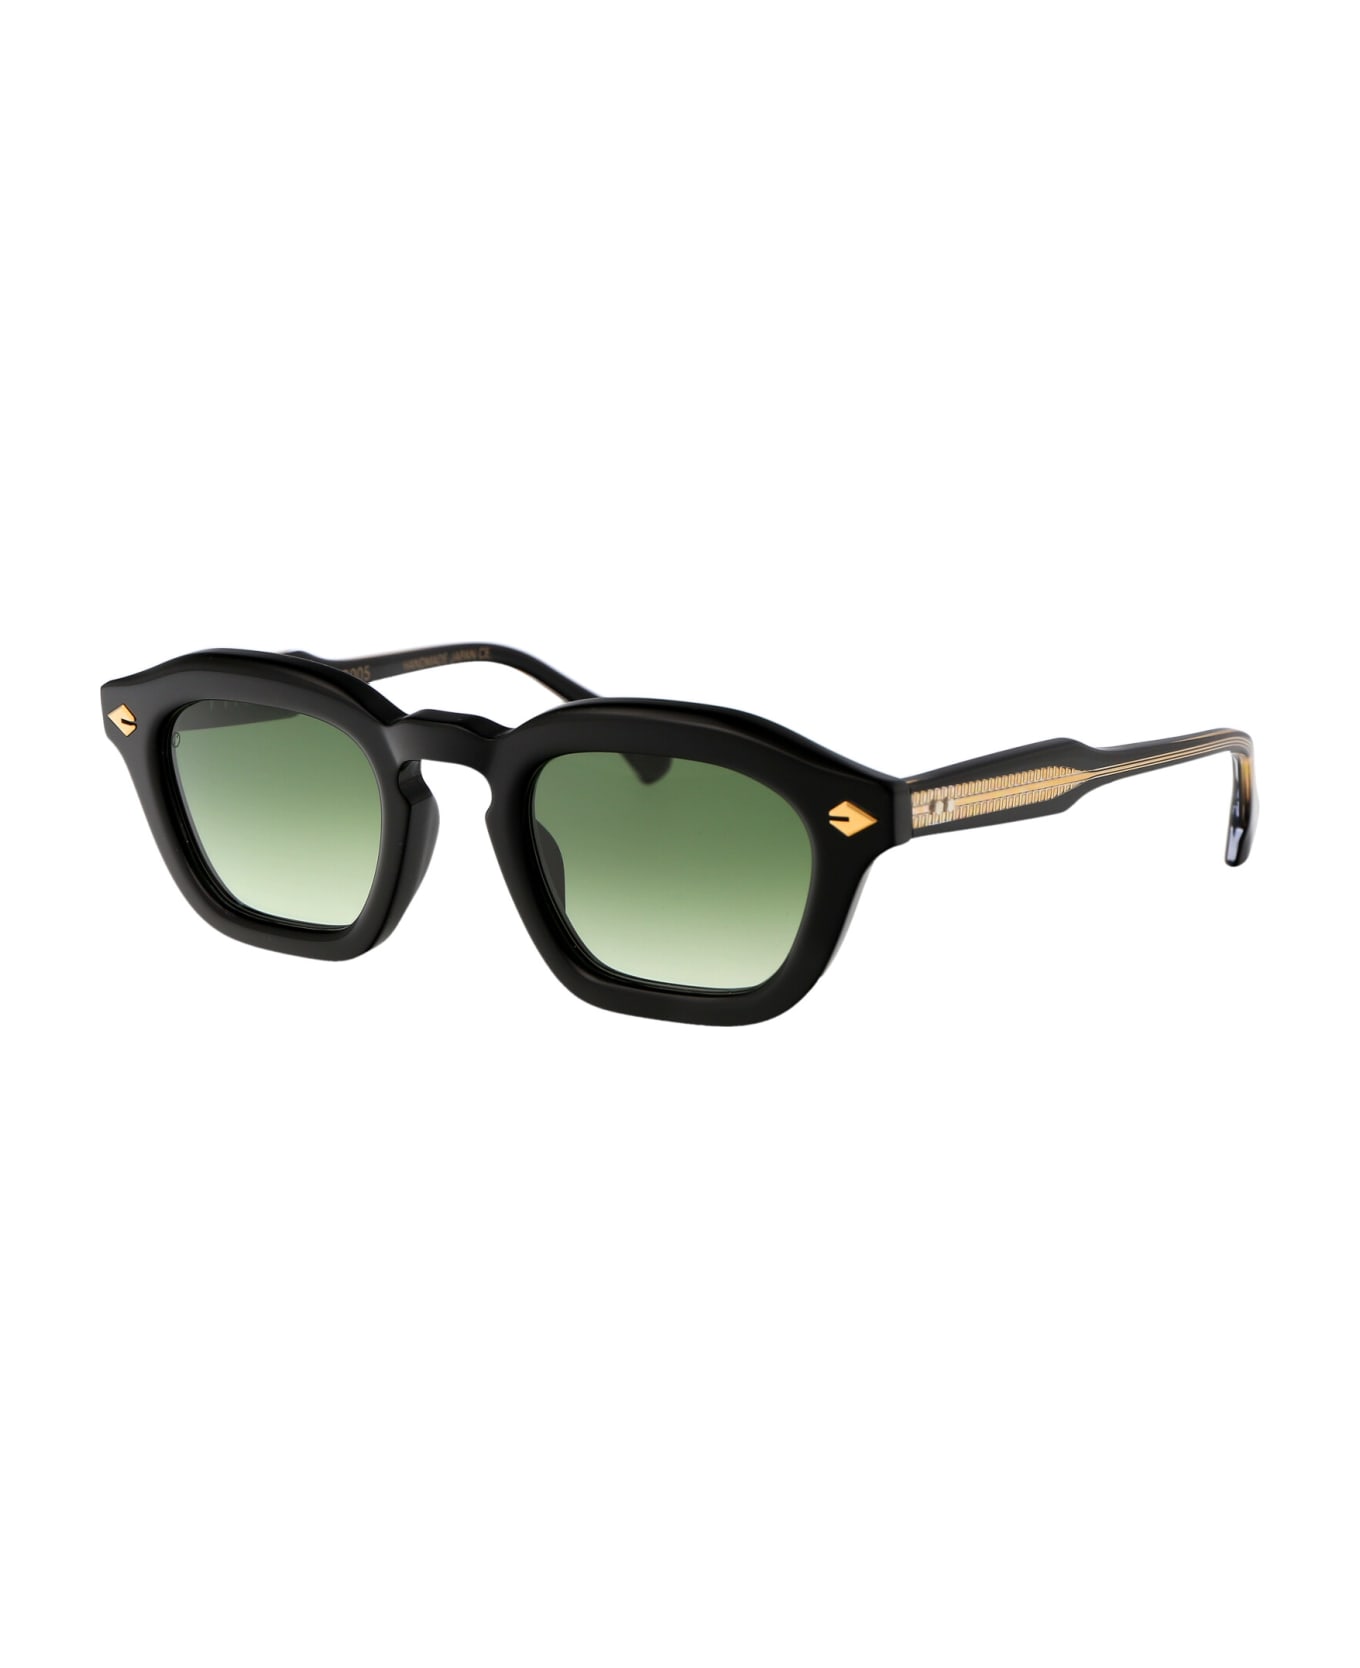 T Henri Veneno Sunglasses - ASTEROID サングラス